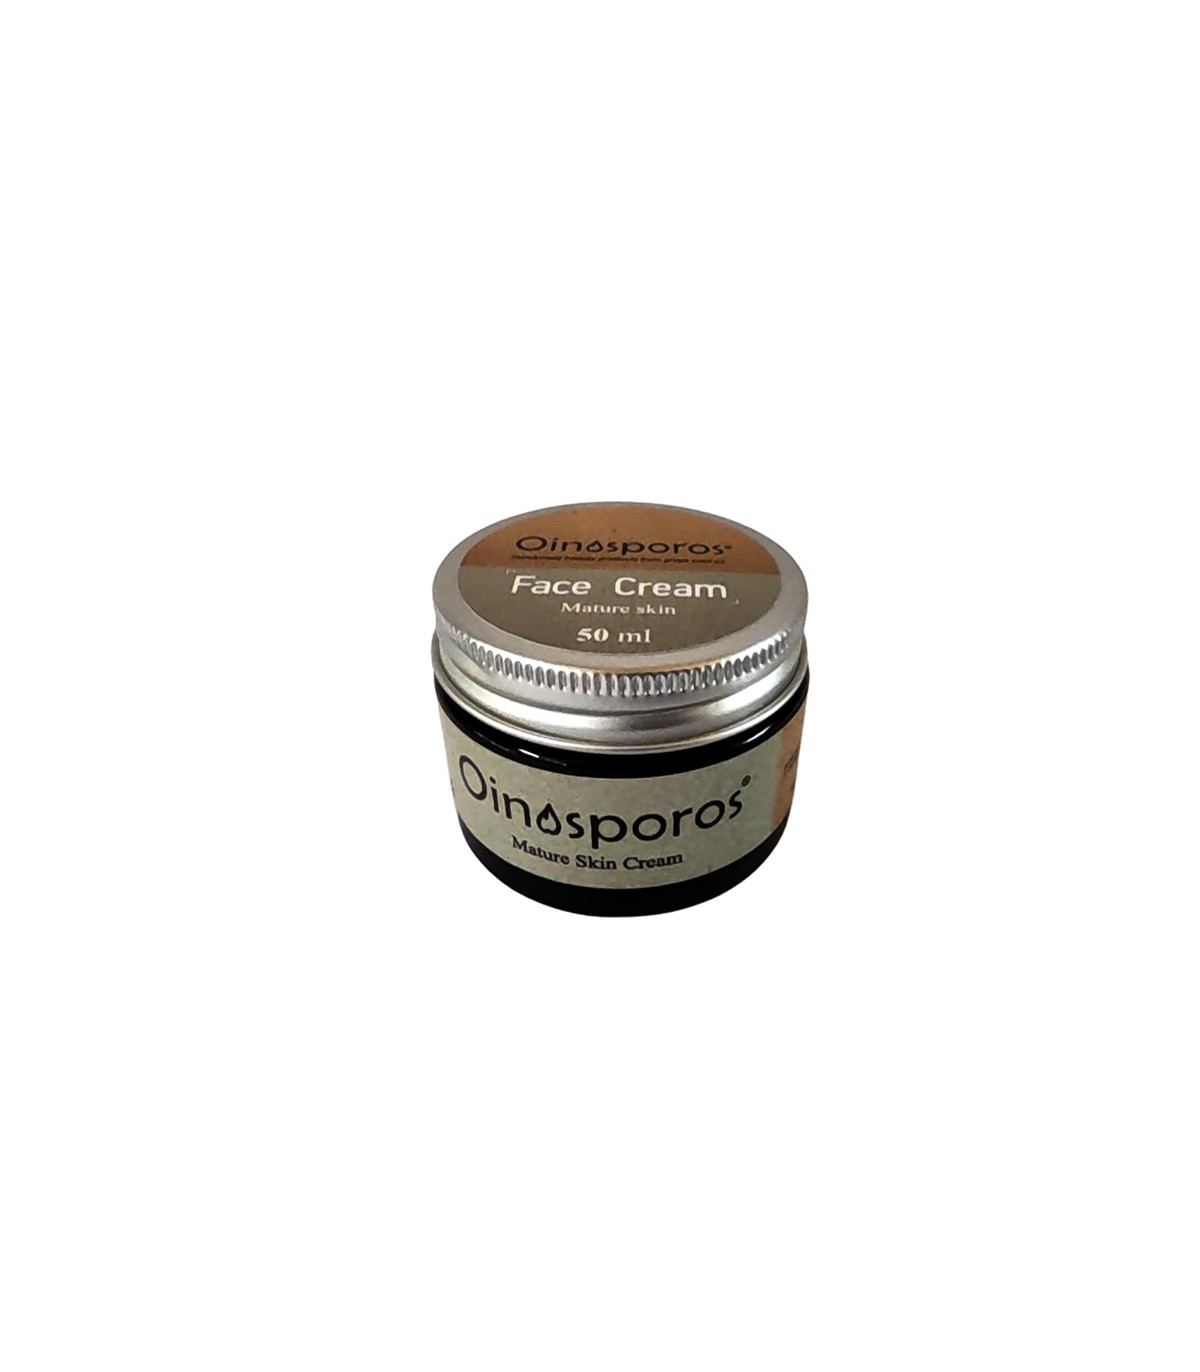 Oinosporos Day Cream Mature Skin, 50ml